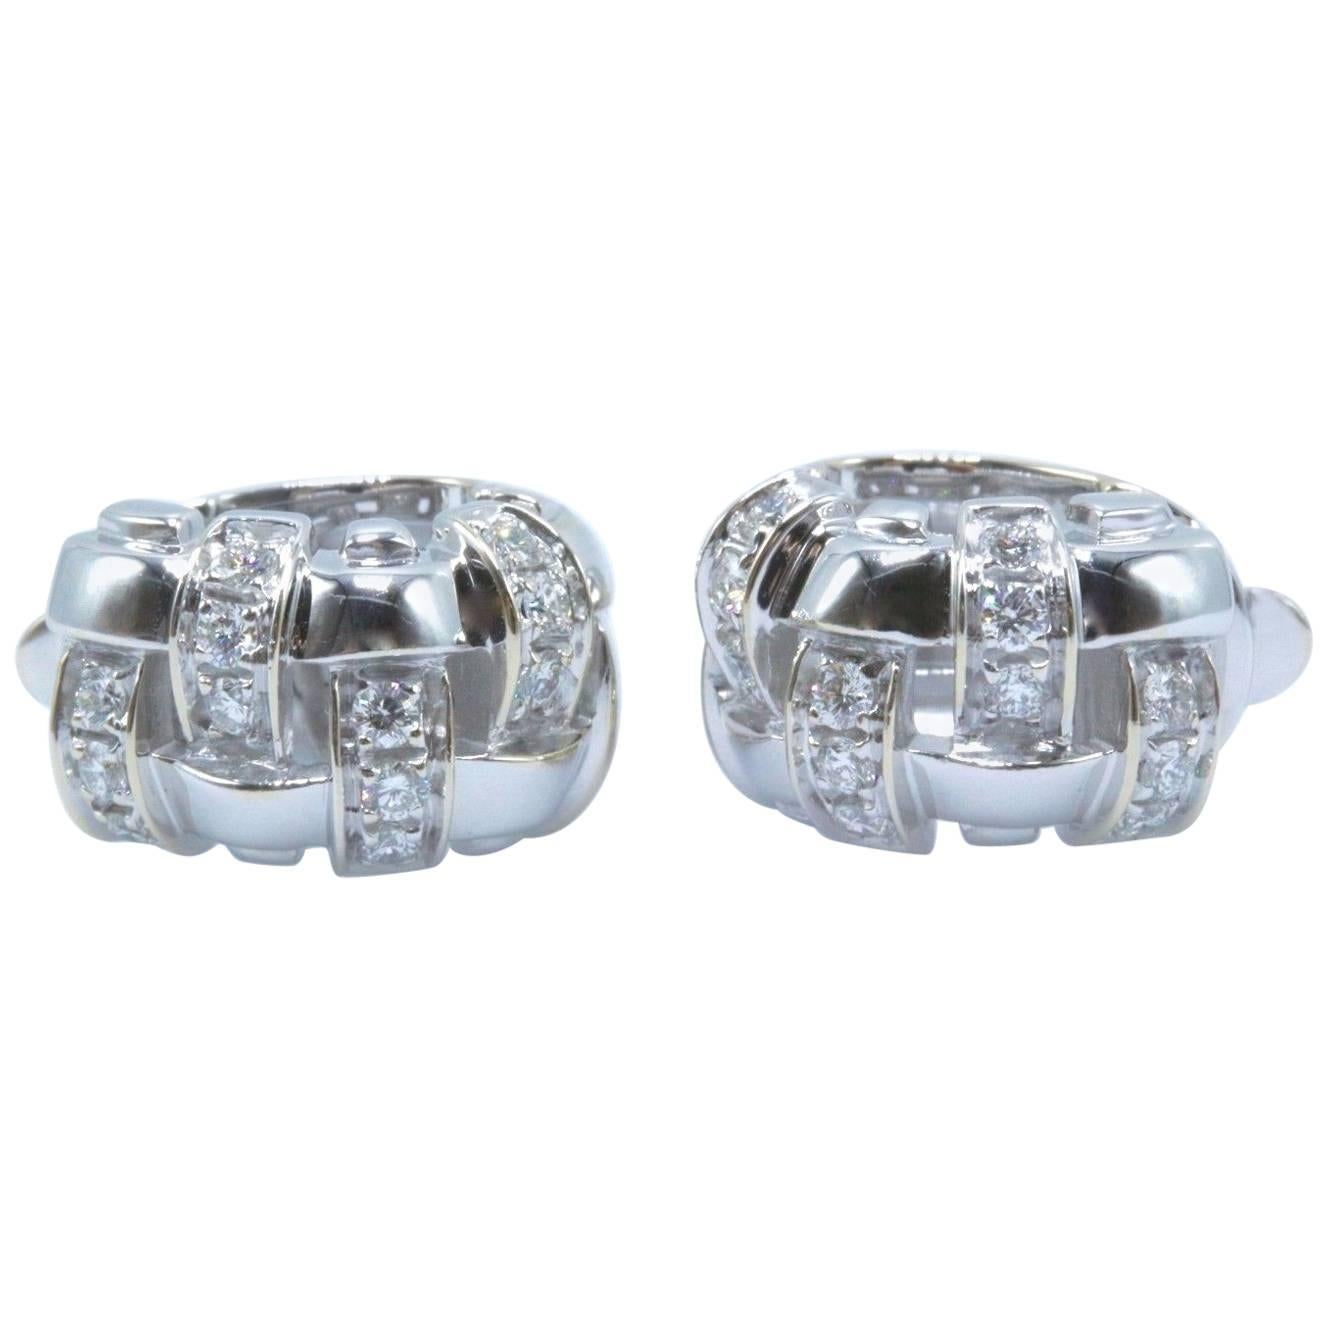 Tiffany & Co. Vannerie Basket Weave Diamond Earrings 18 Karat White Gold